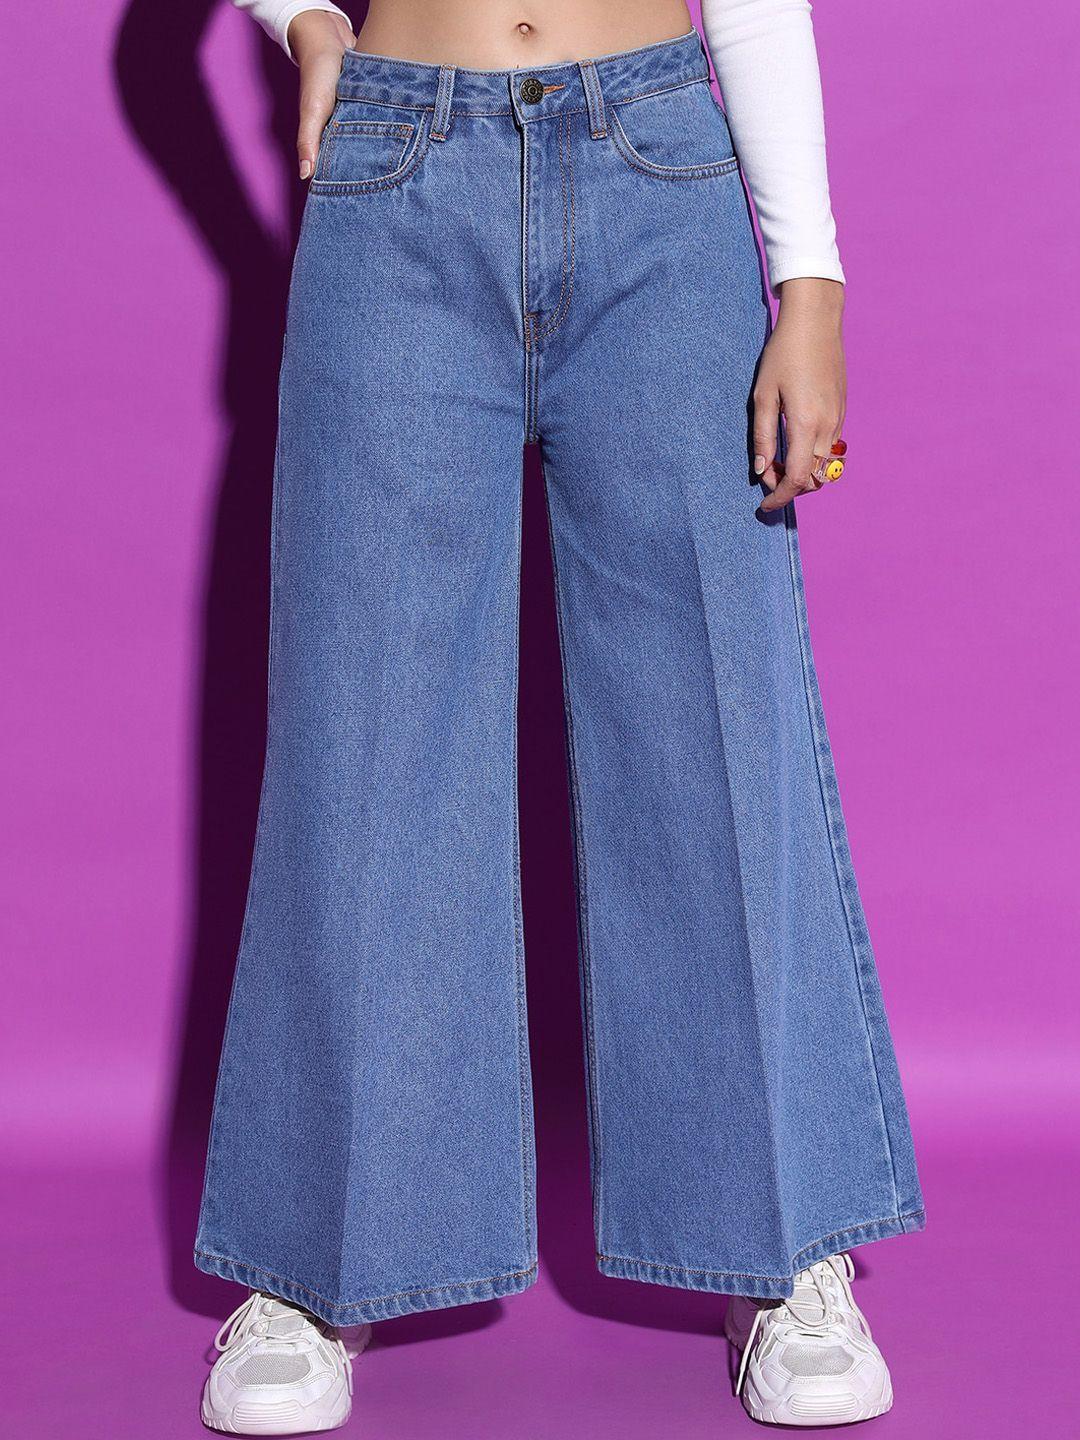 tokyo talkies women mid-rise clean look flared jeans